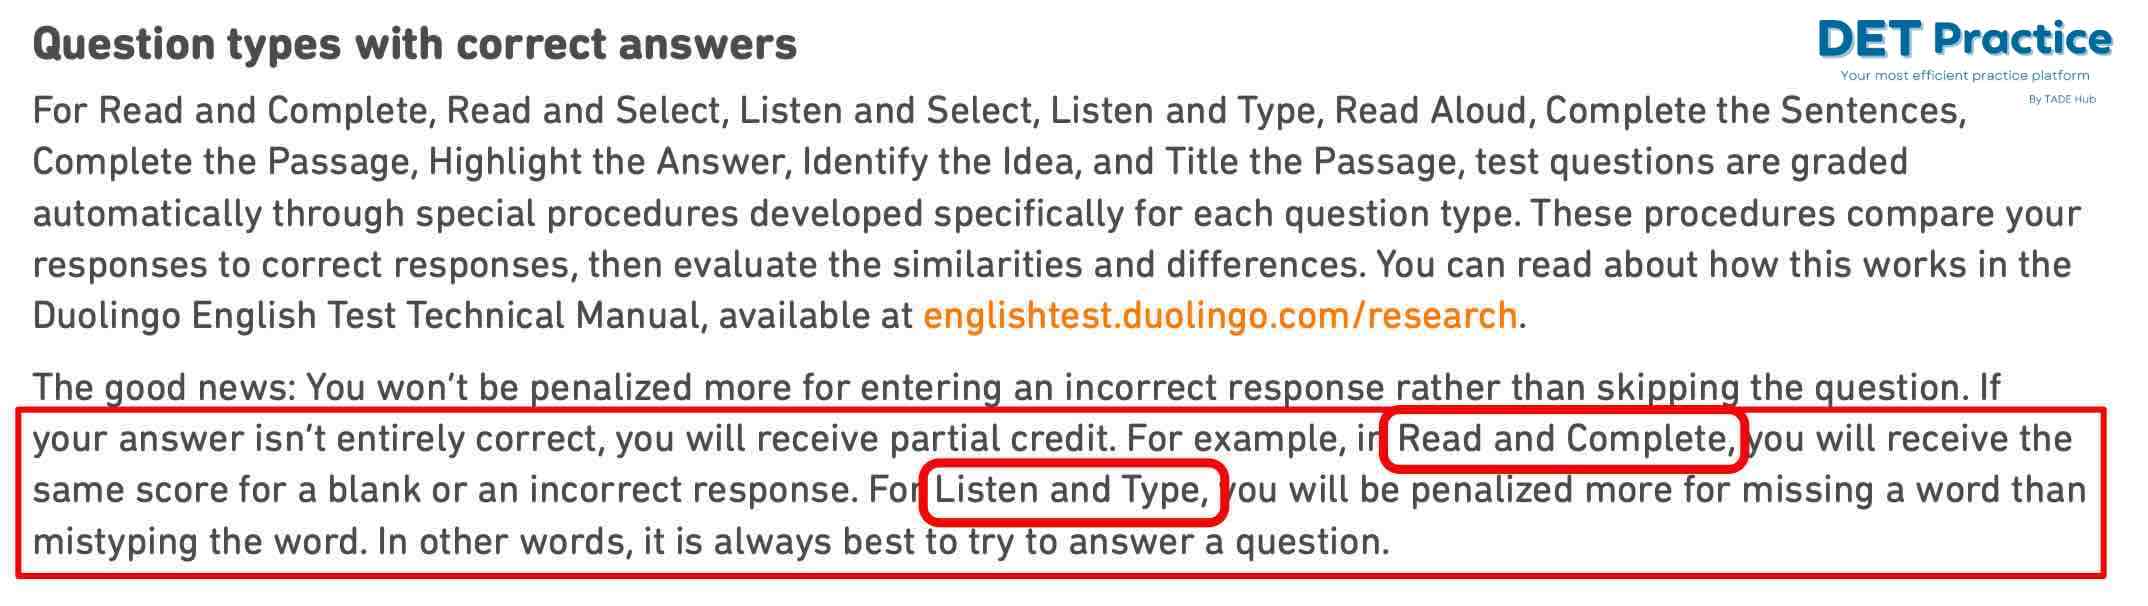 duolingo scores explanation, det practice platform, Duolingo Test preparation, read and complete, listen and type, duolingo question type